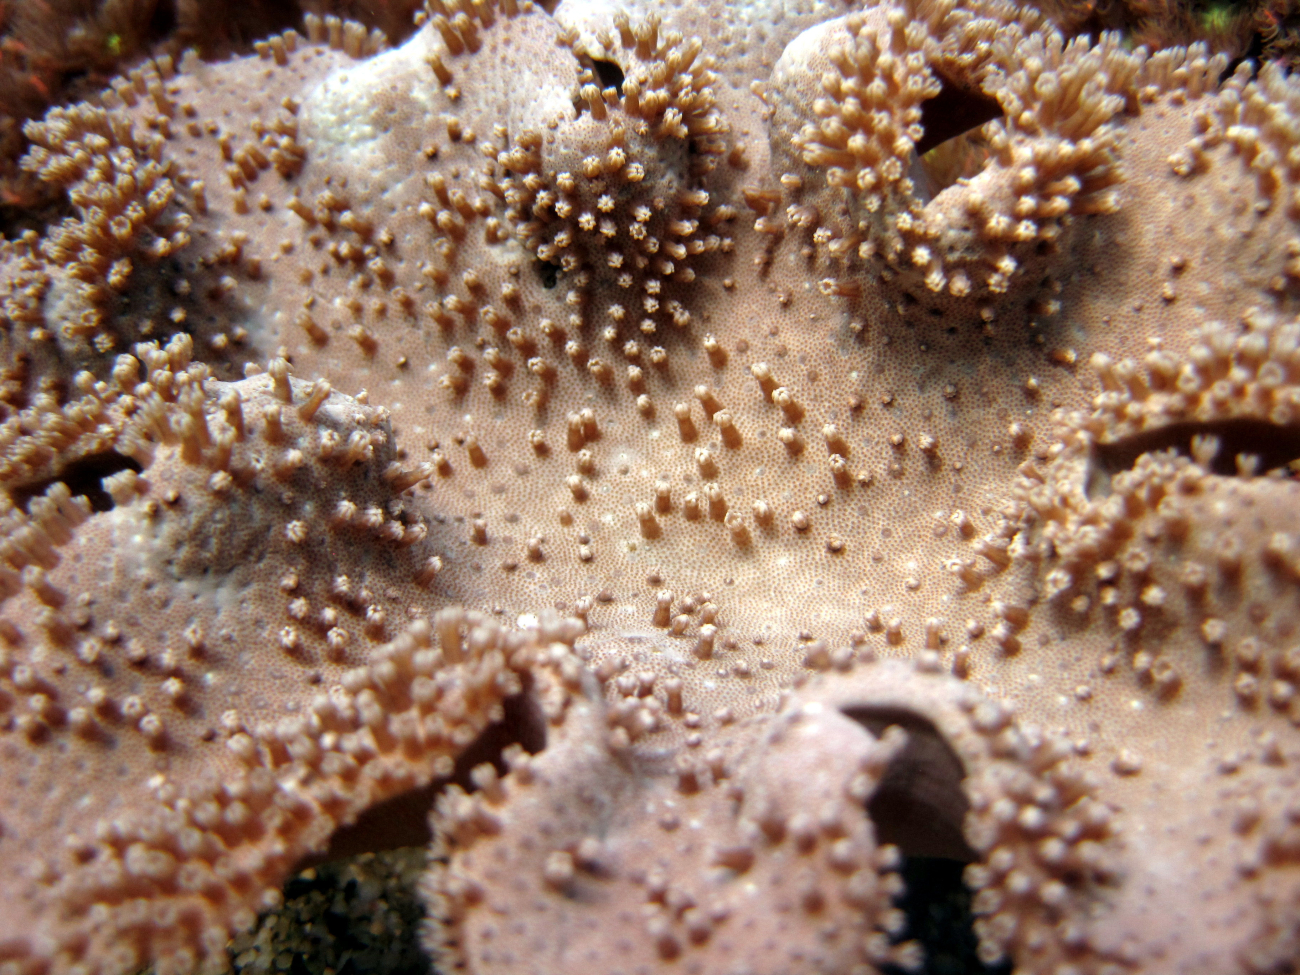 A mushroom leather coral